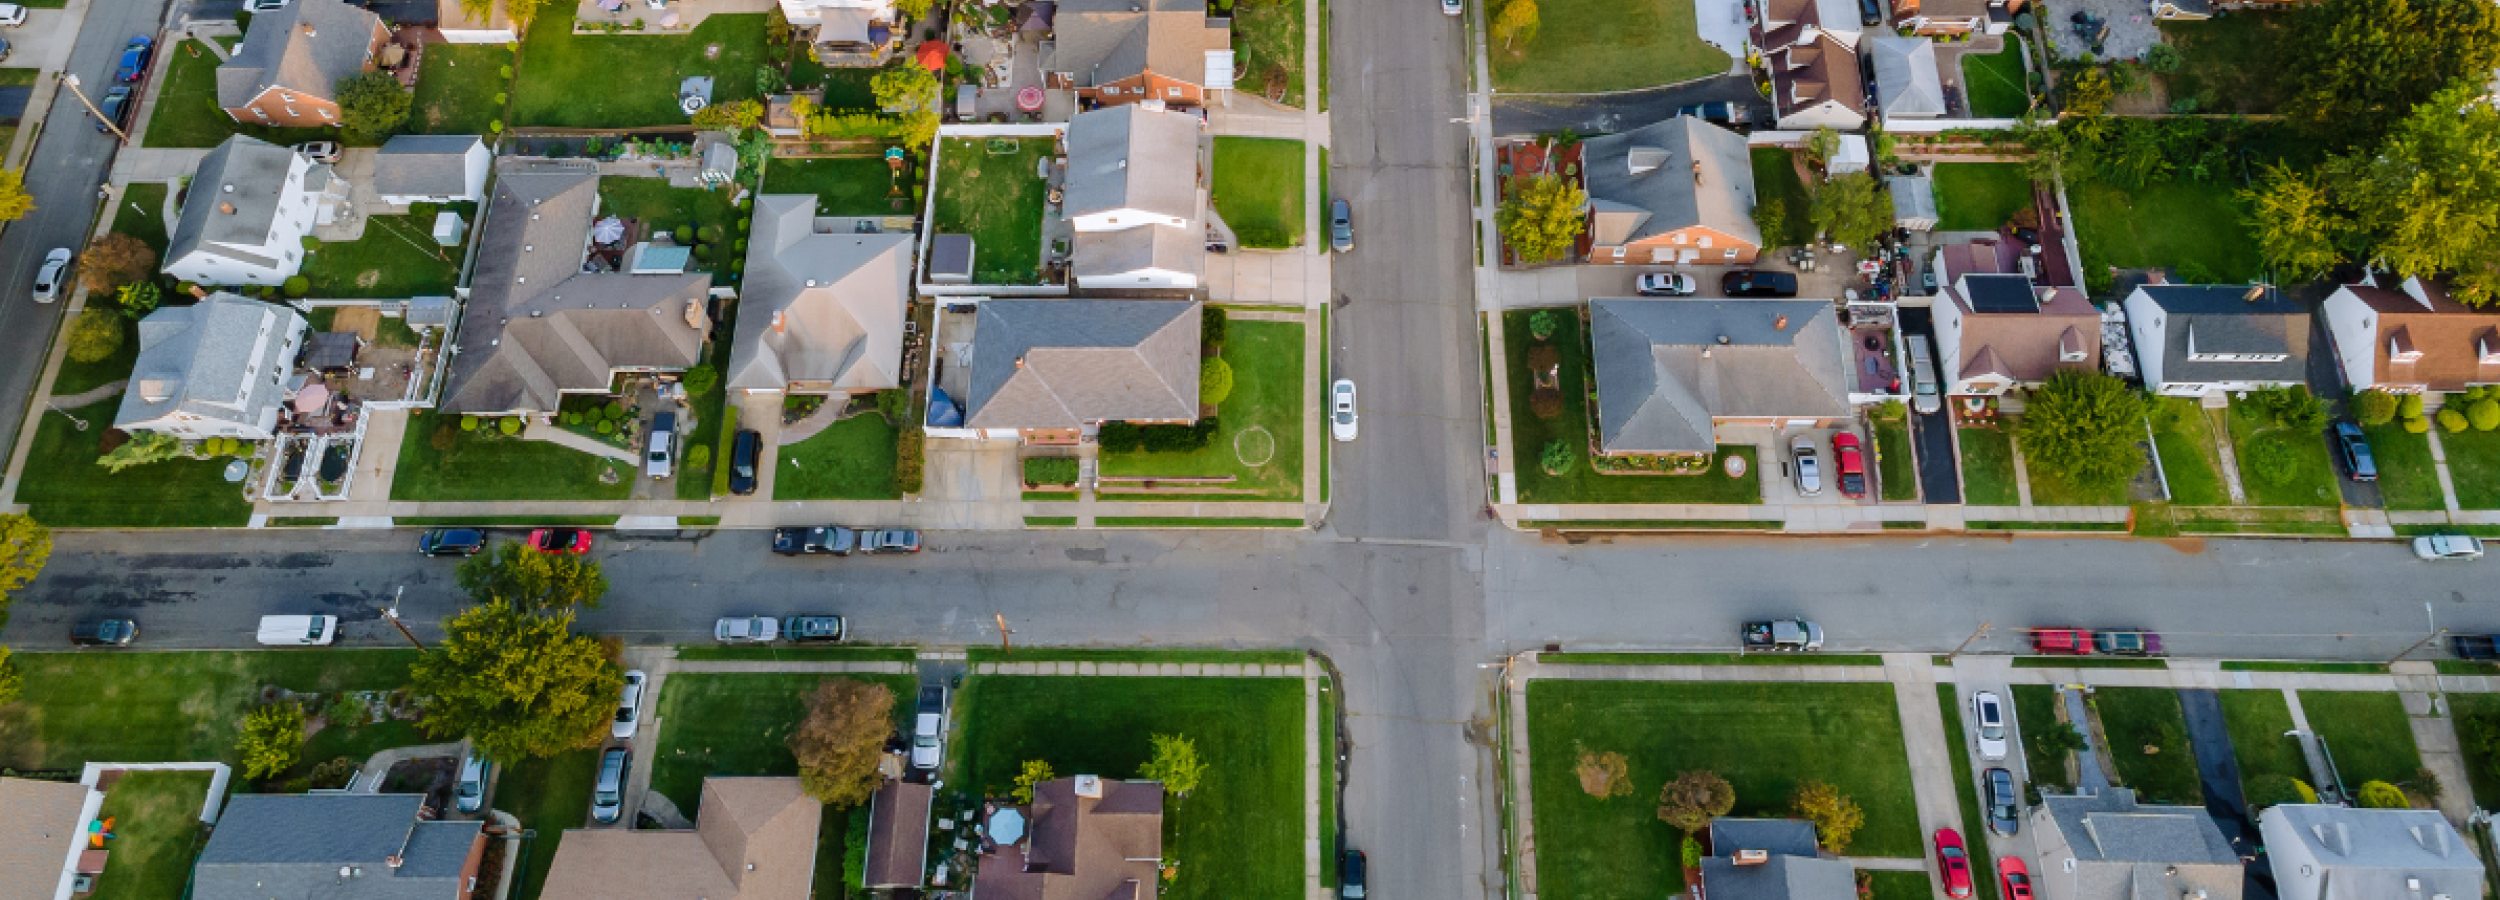 aerial photo of a suburban neighborhood